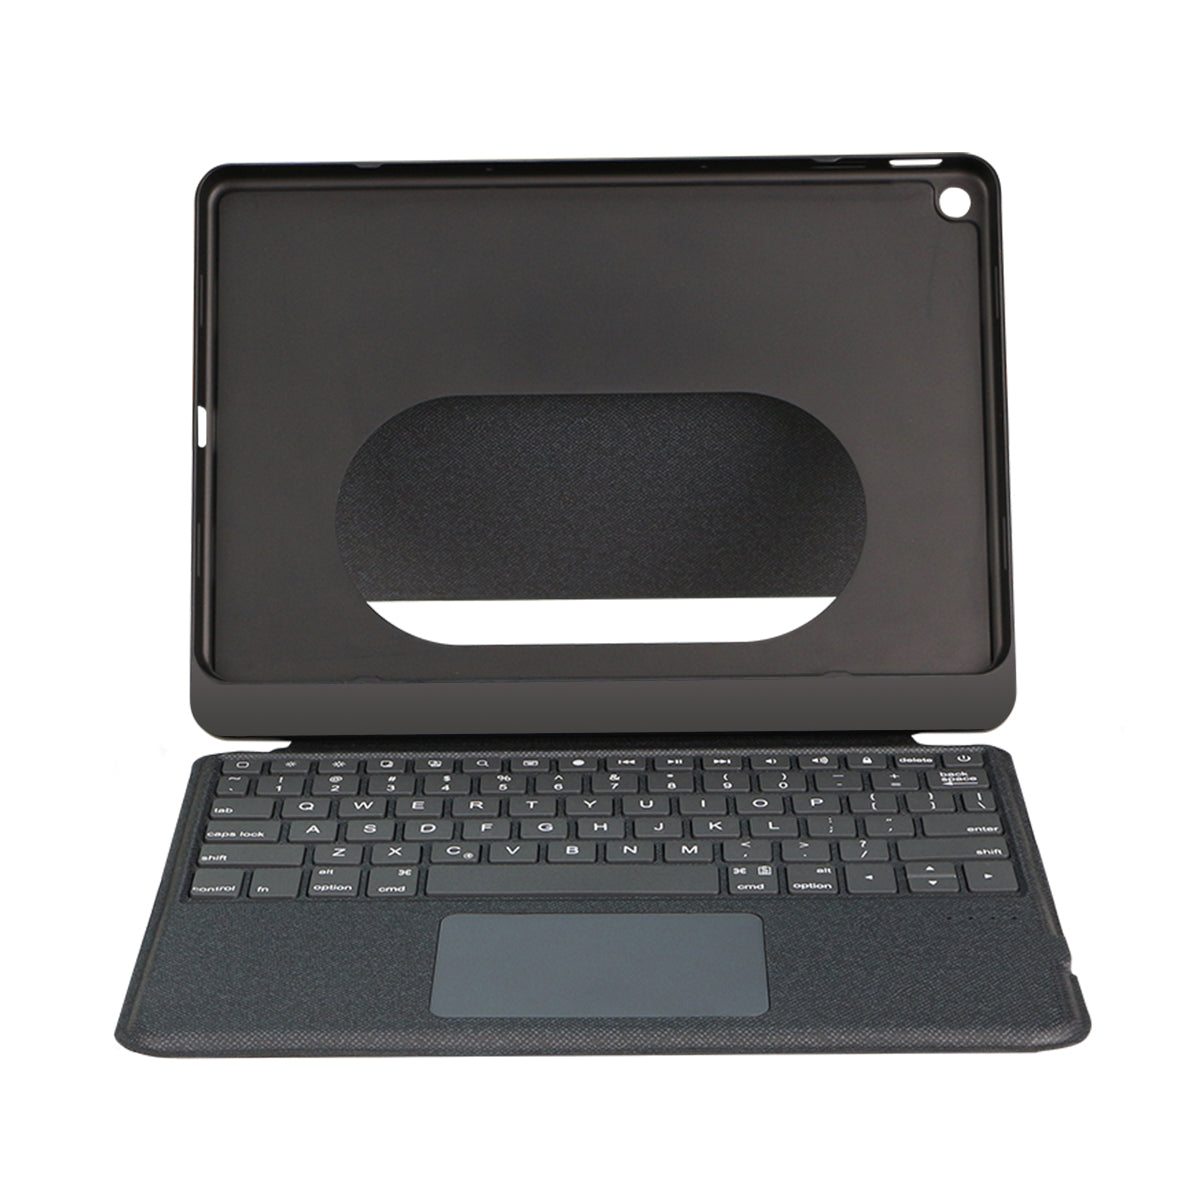 OEM ODM Pu Leather Case Teclado Smart Keyboard Covers Cases For Google Pixel Keyboard Case